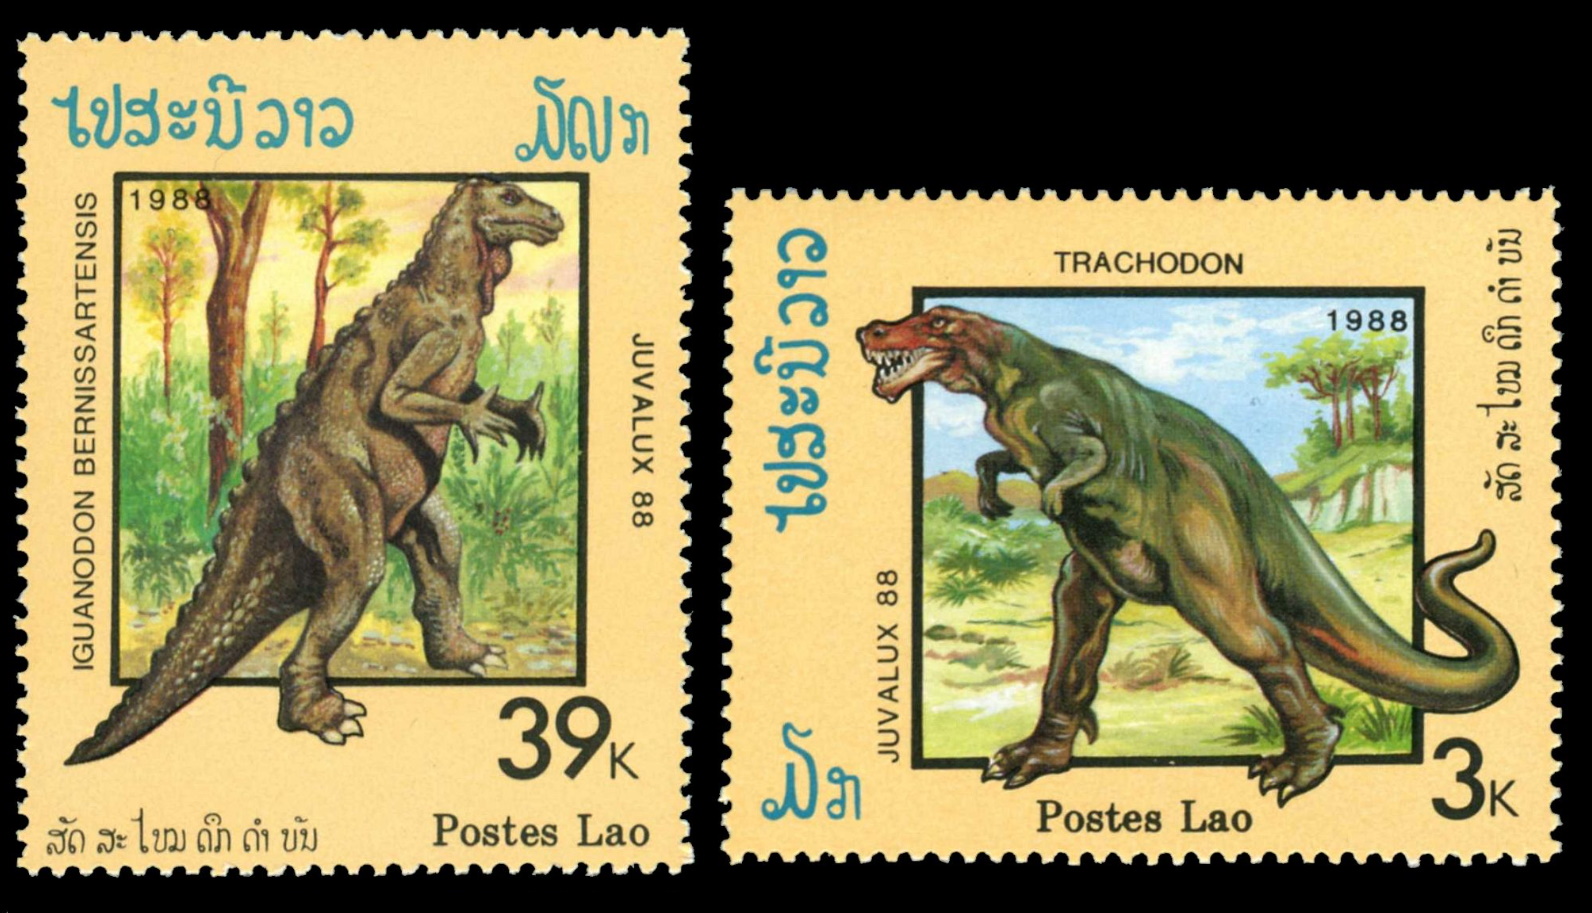 Iguanodon and Tyrannosaurus (misnamed Trachodon) dinosaurs on stamps of Laos 1988